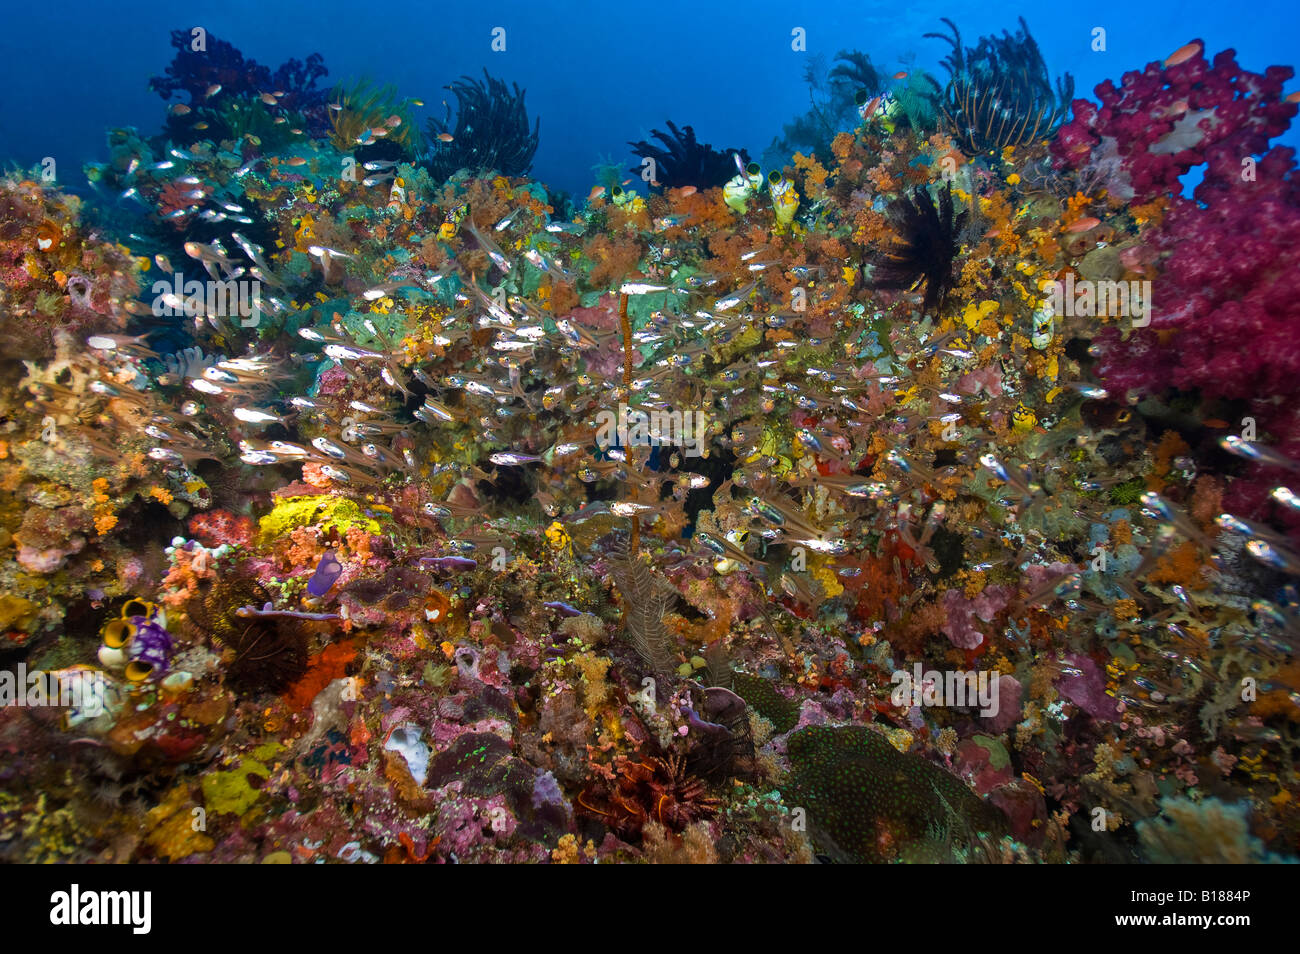 Reef Scene with Sweepers Parapriacanthus Raja Ampat West Papua Irian Jaya Indonesia Stock Photo